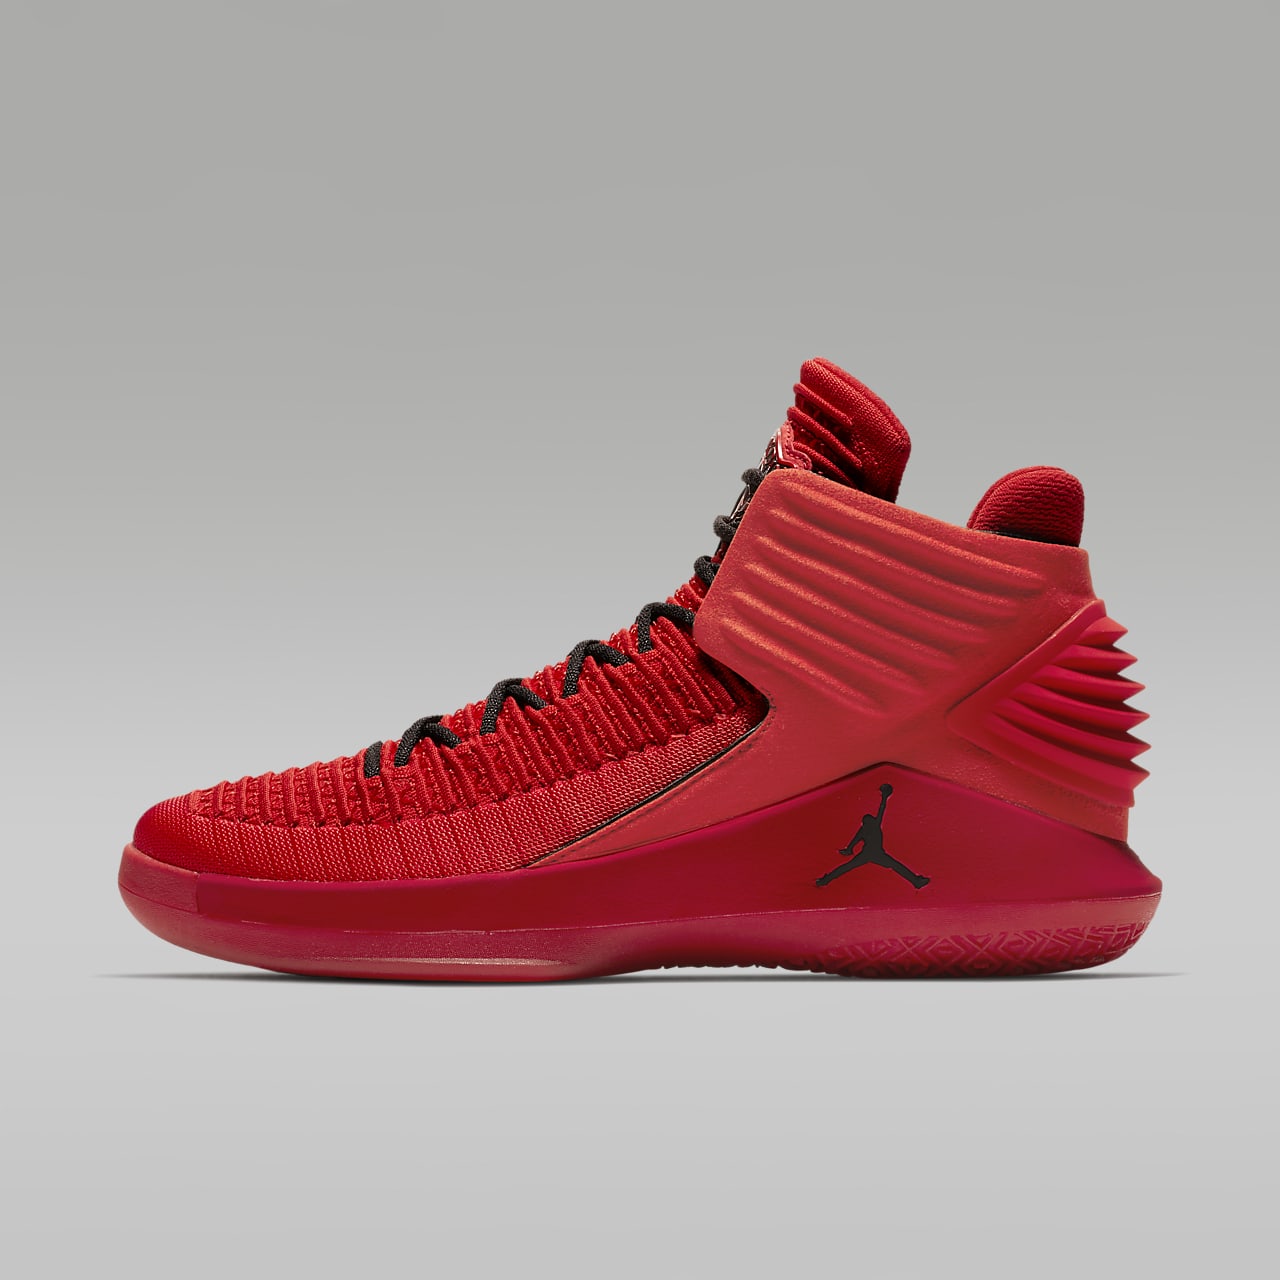 Air Jordan XXXII "Rosso Corsa" 男款籃球鞋